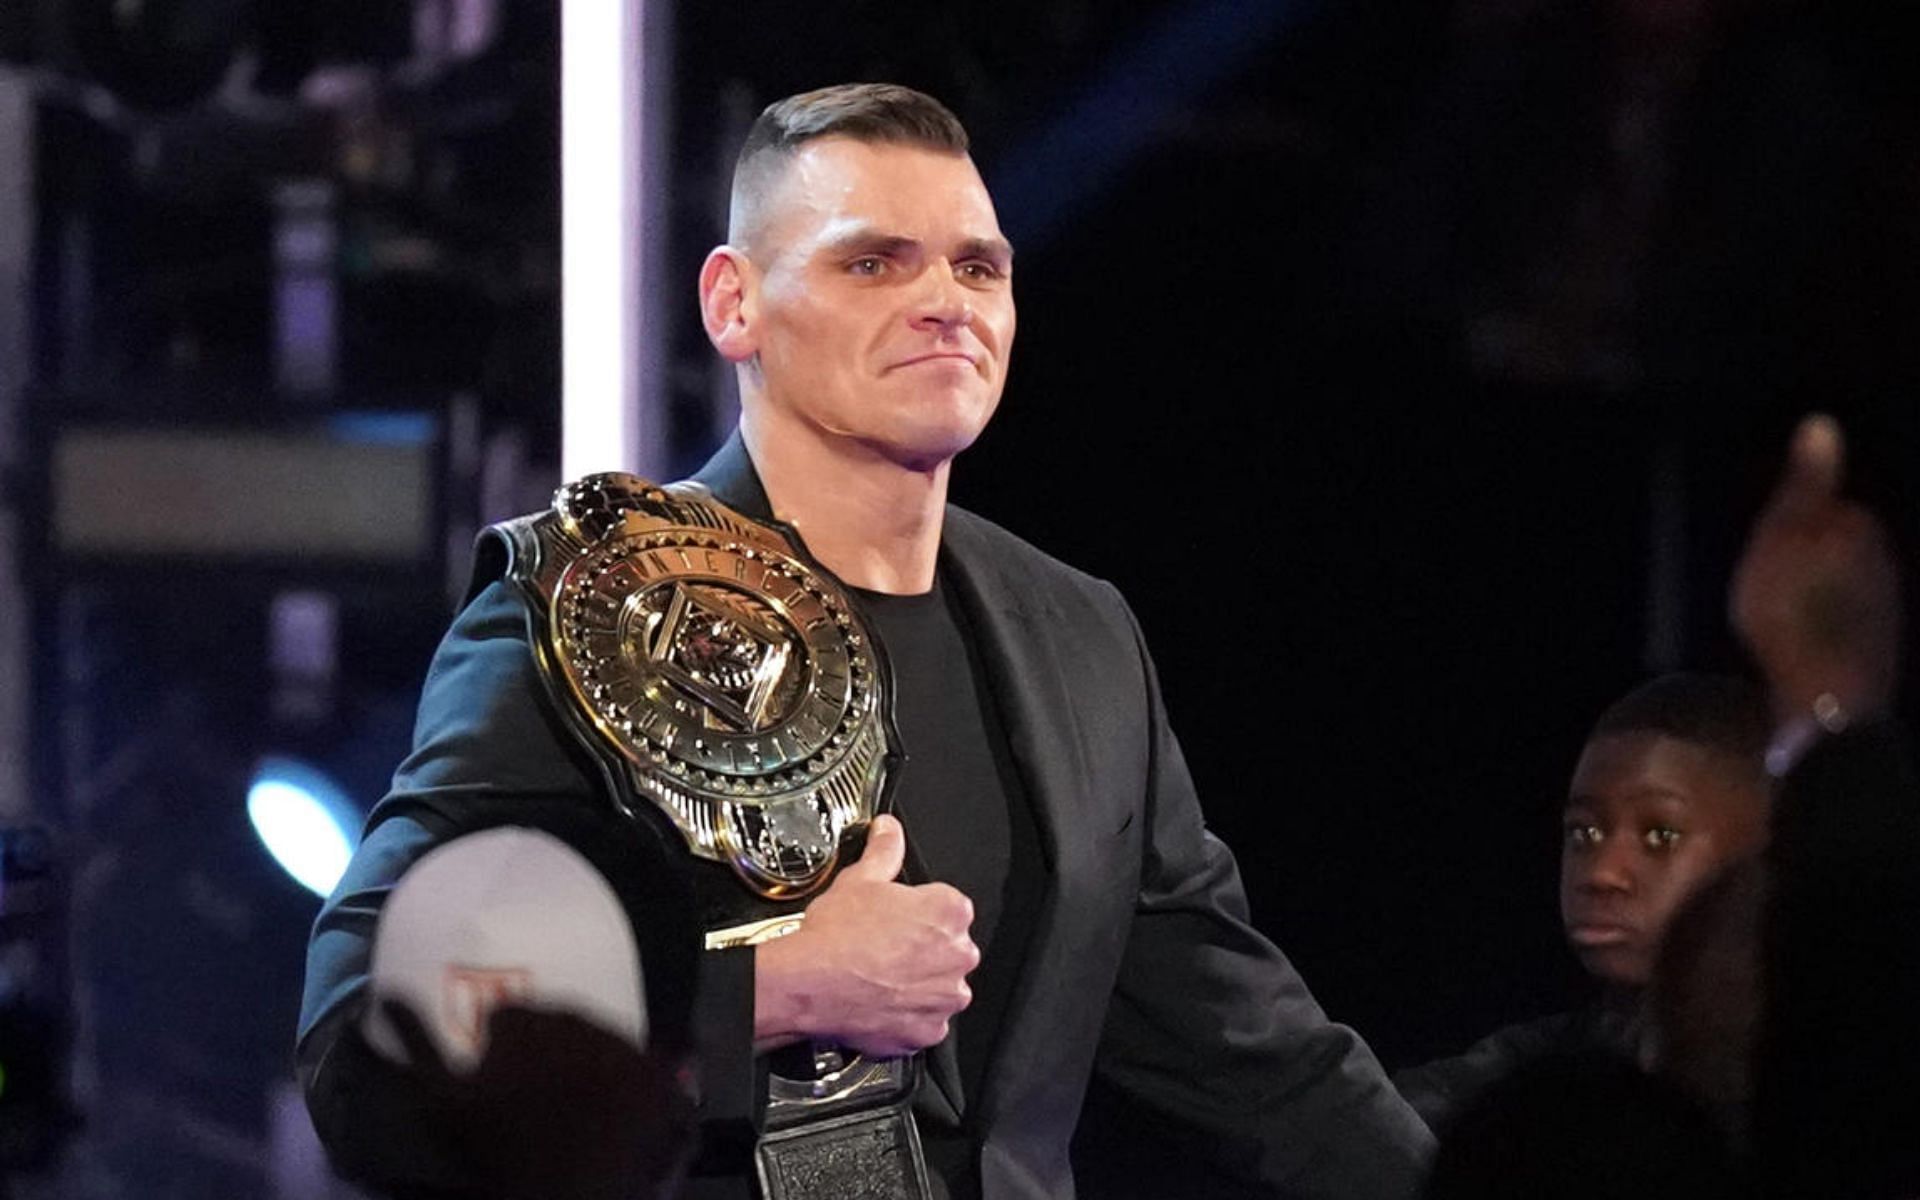 The Intercontinental Champion (Pic courtesy: WWE.com)